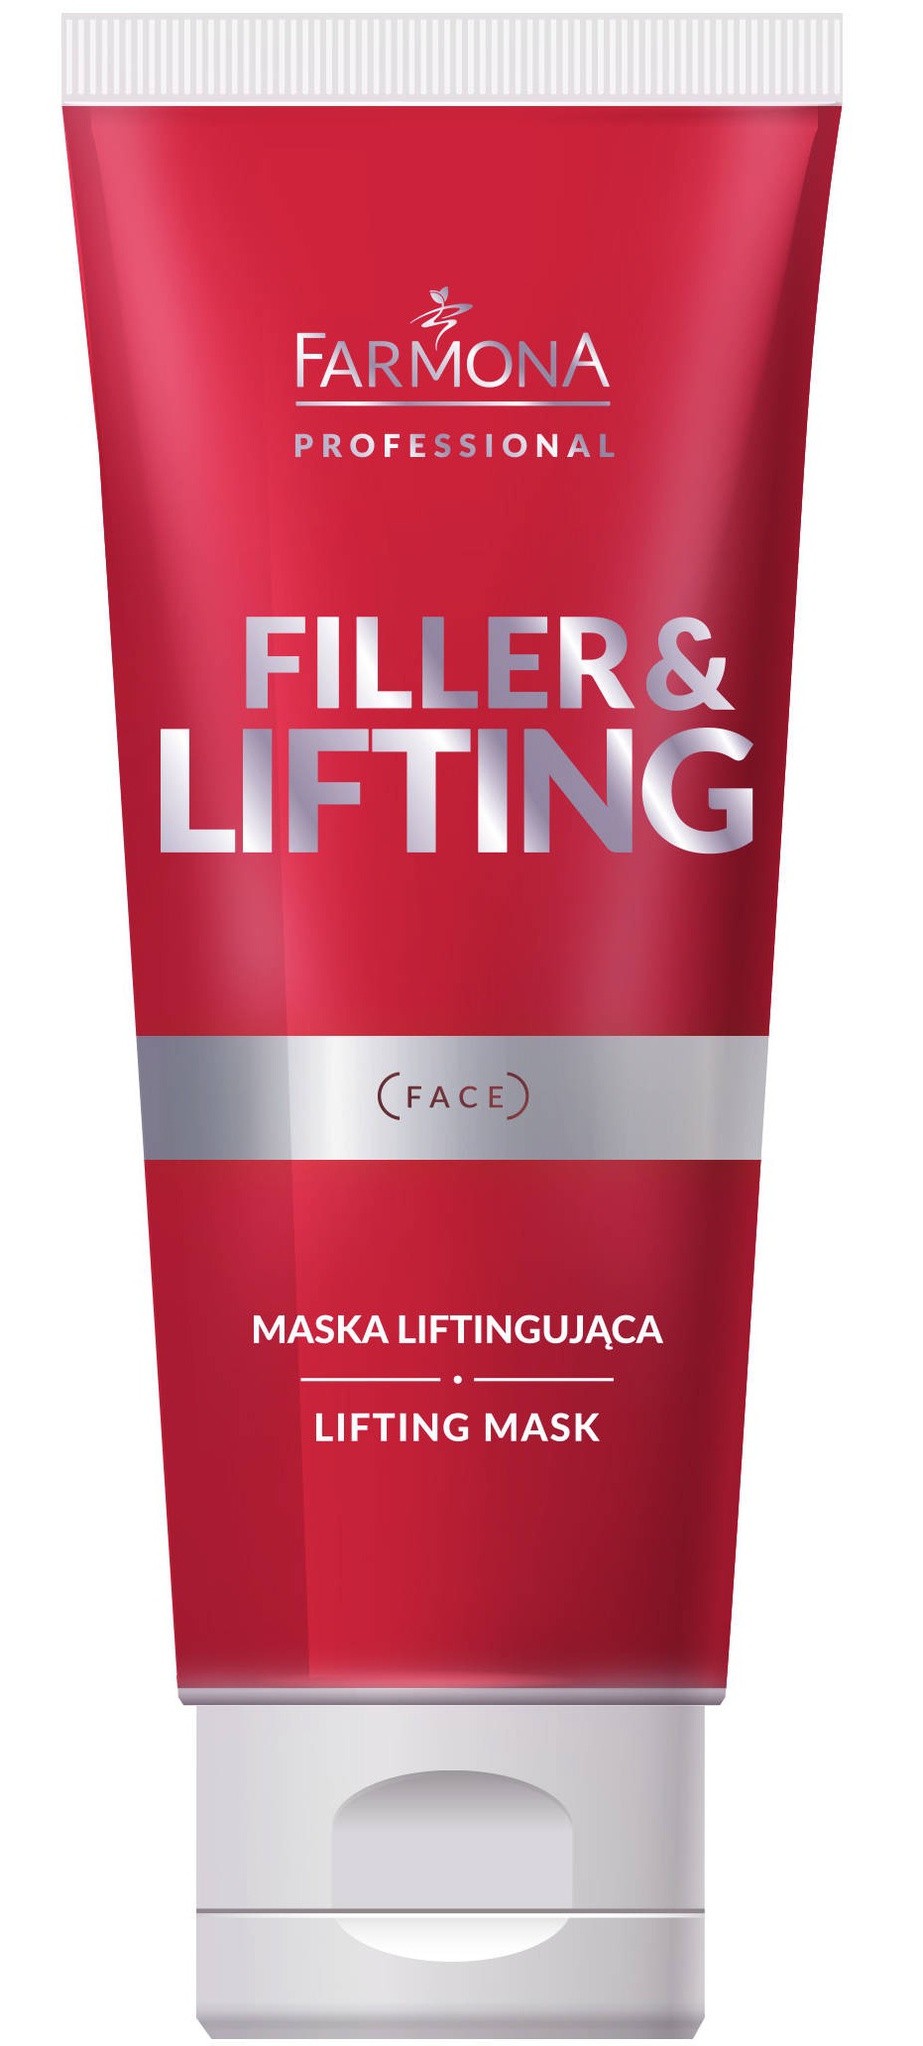 Farmona Professional Filler & Lifting Mask